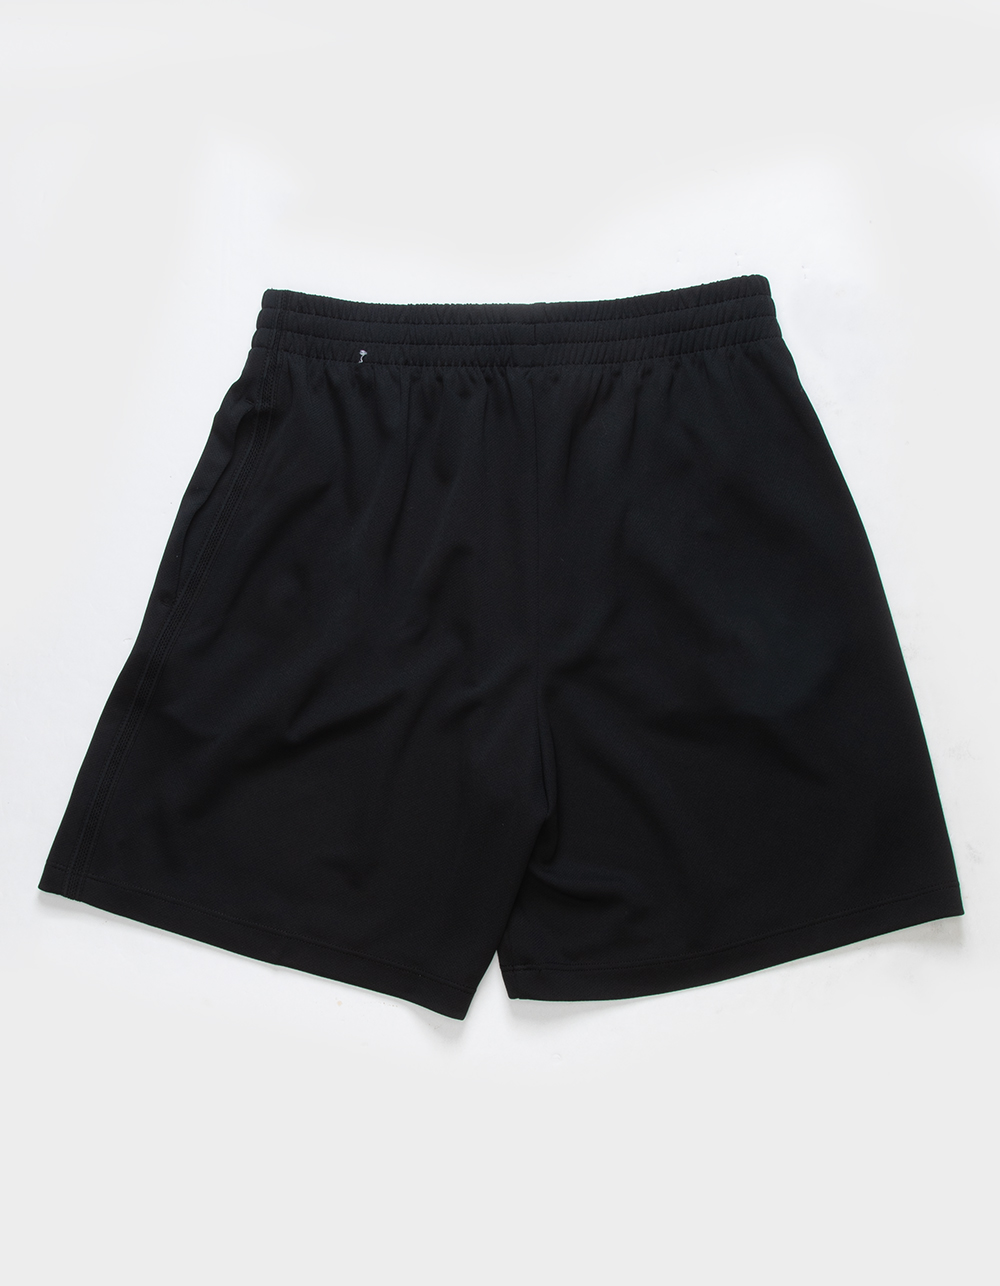 NIKE Dri-FIT Boys Shorts - BLACK | Tillys